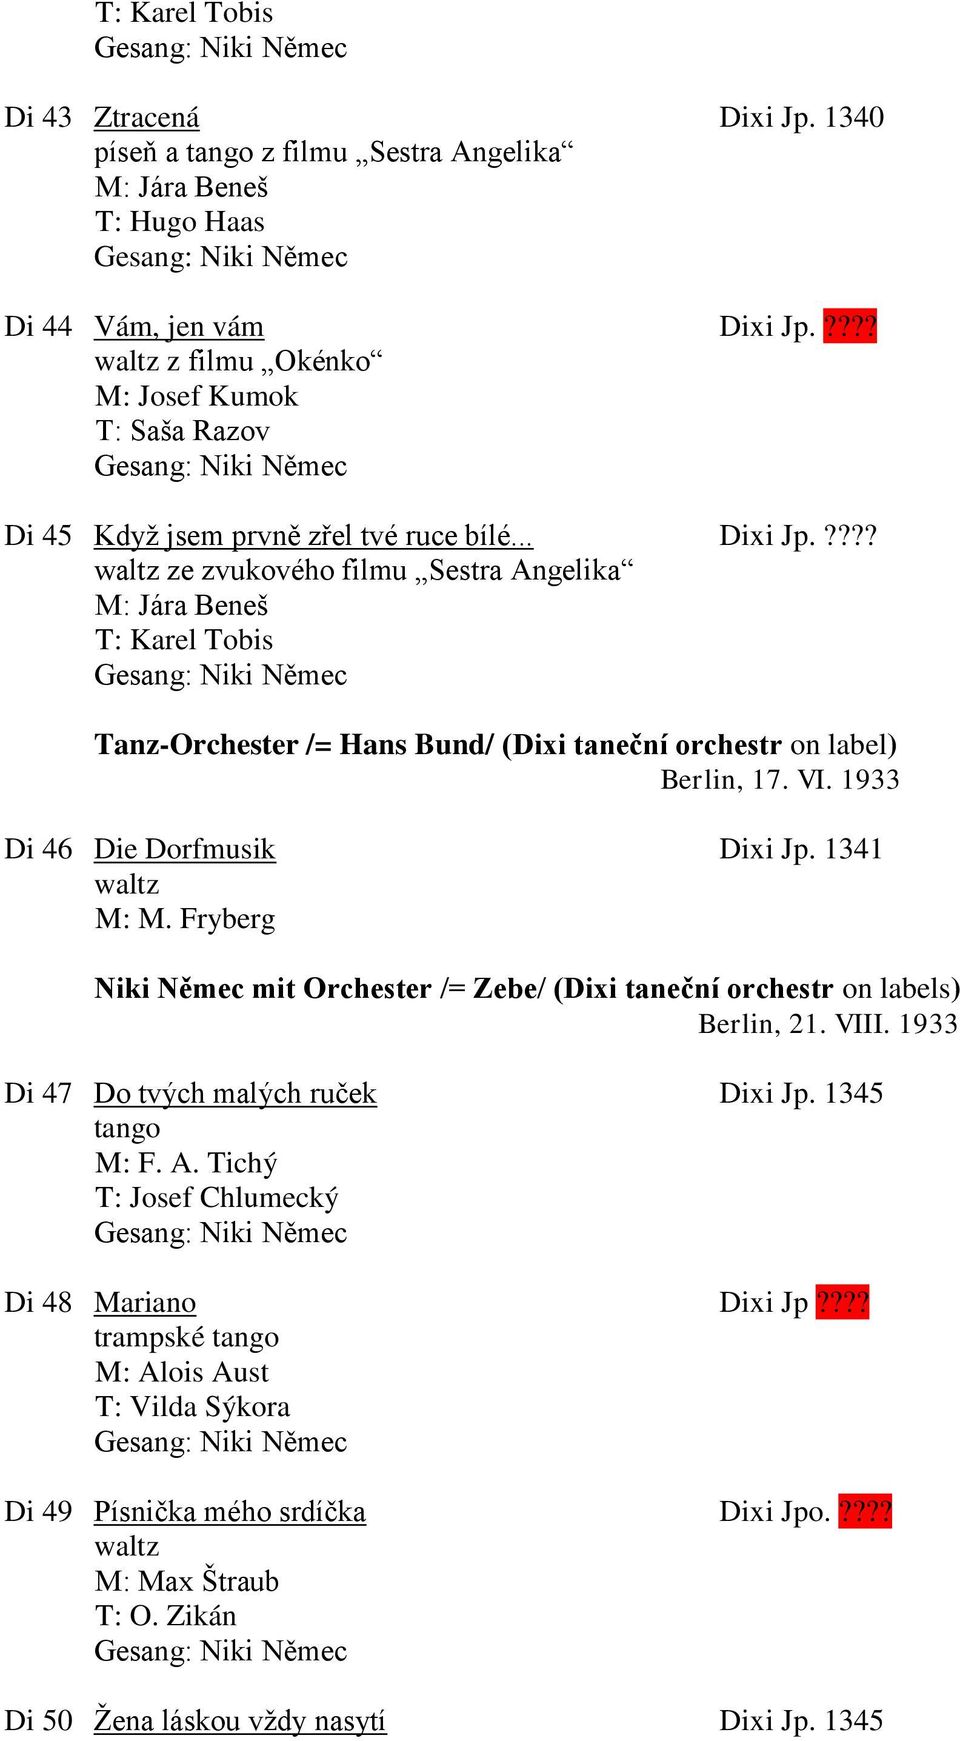 ???? ze zvukového filmu Sestra Angelika T: Karel Tobis Tanz-Orchester /= Hans Bund/ (Dixi taneční orchestr on label) Berlin, 17. VI. 1933 Di 46 Die Dorfmusik Dixi Jp. 1341 M: M.